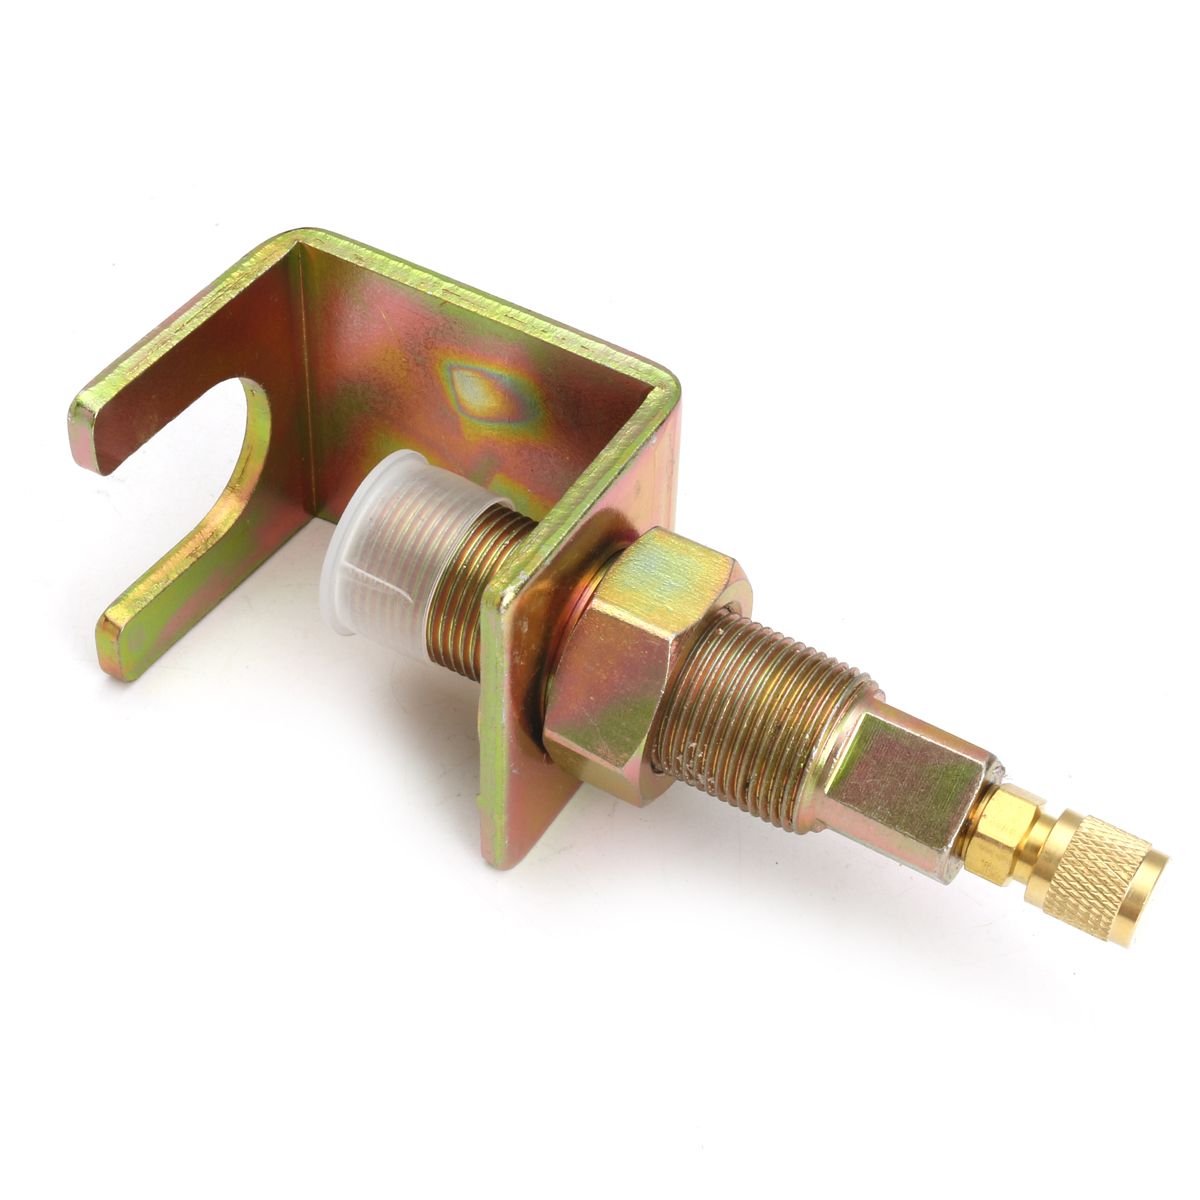 Universal-AC-Flush-Fitting-Adapter-Kit-Leak-Maintenance-Tools-Set-1255667